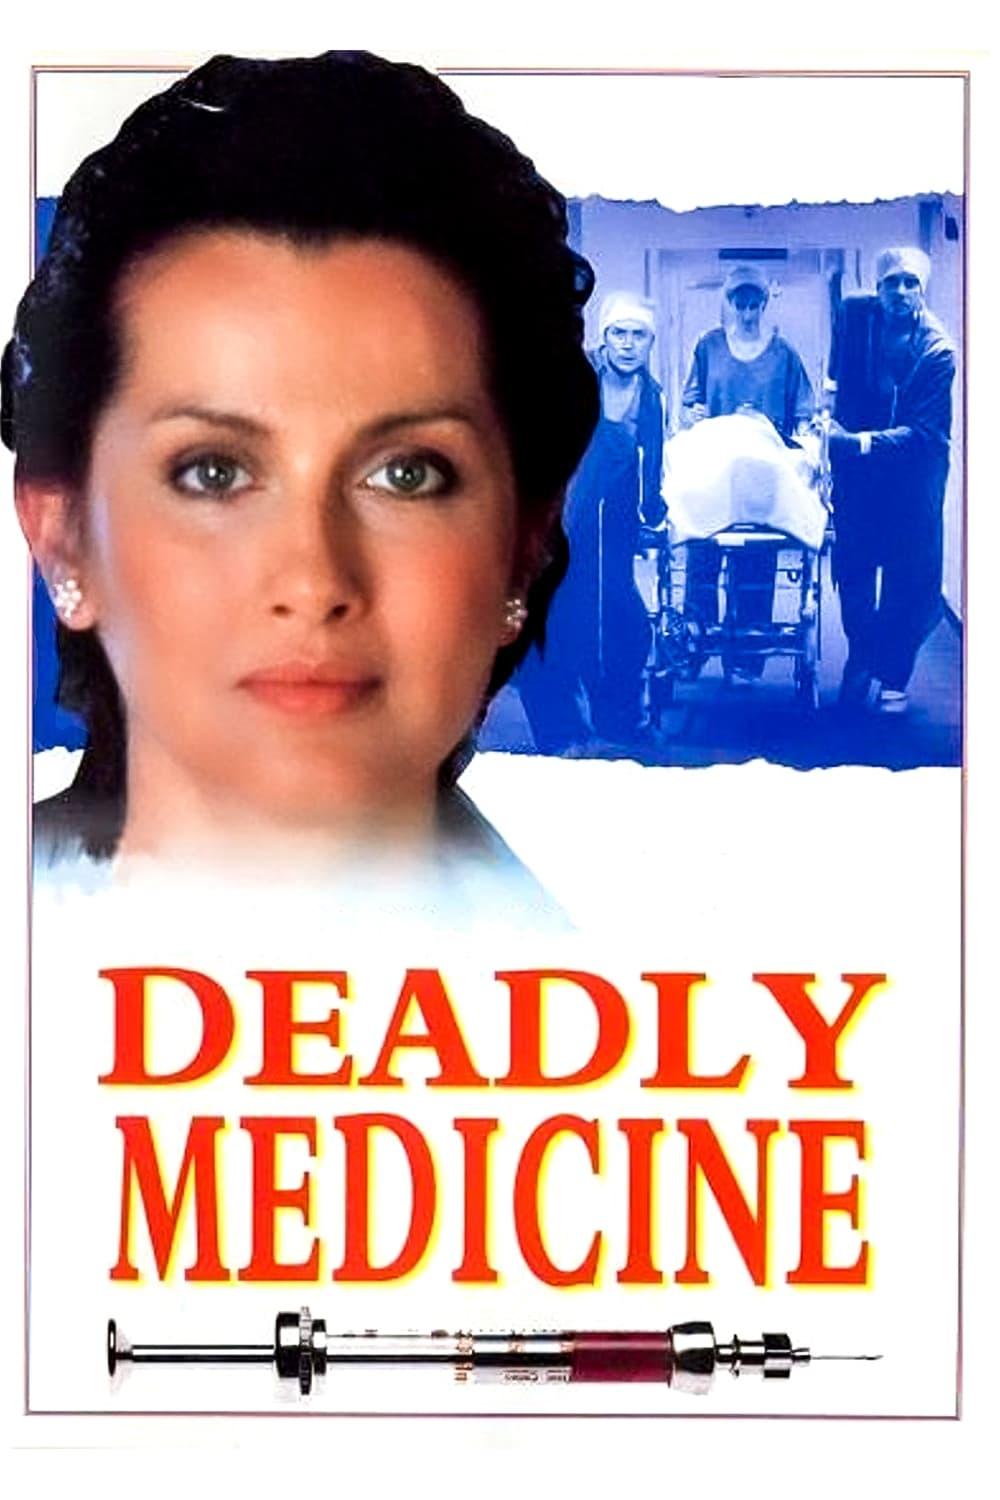 Deadly Medicine poster